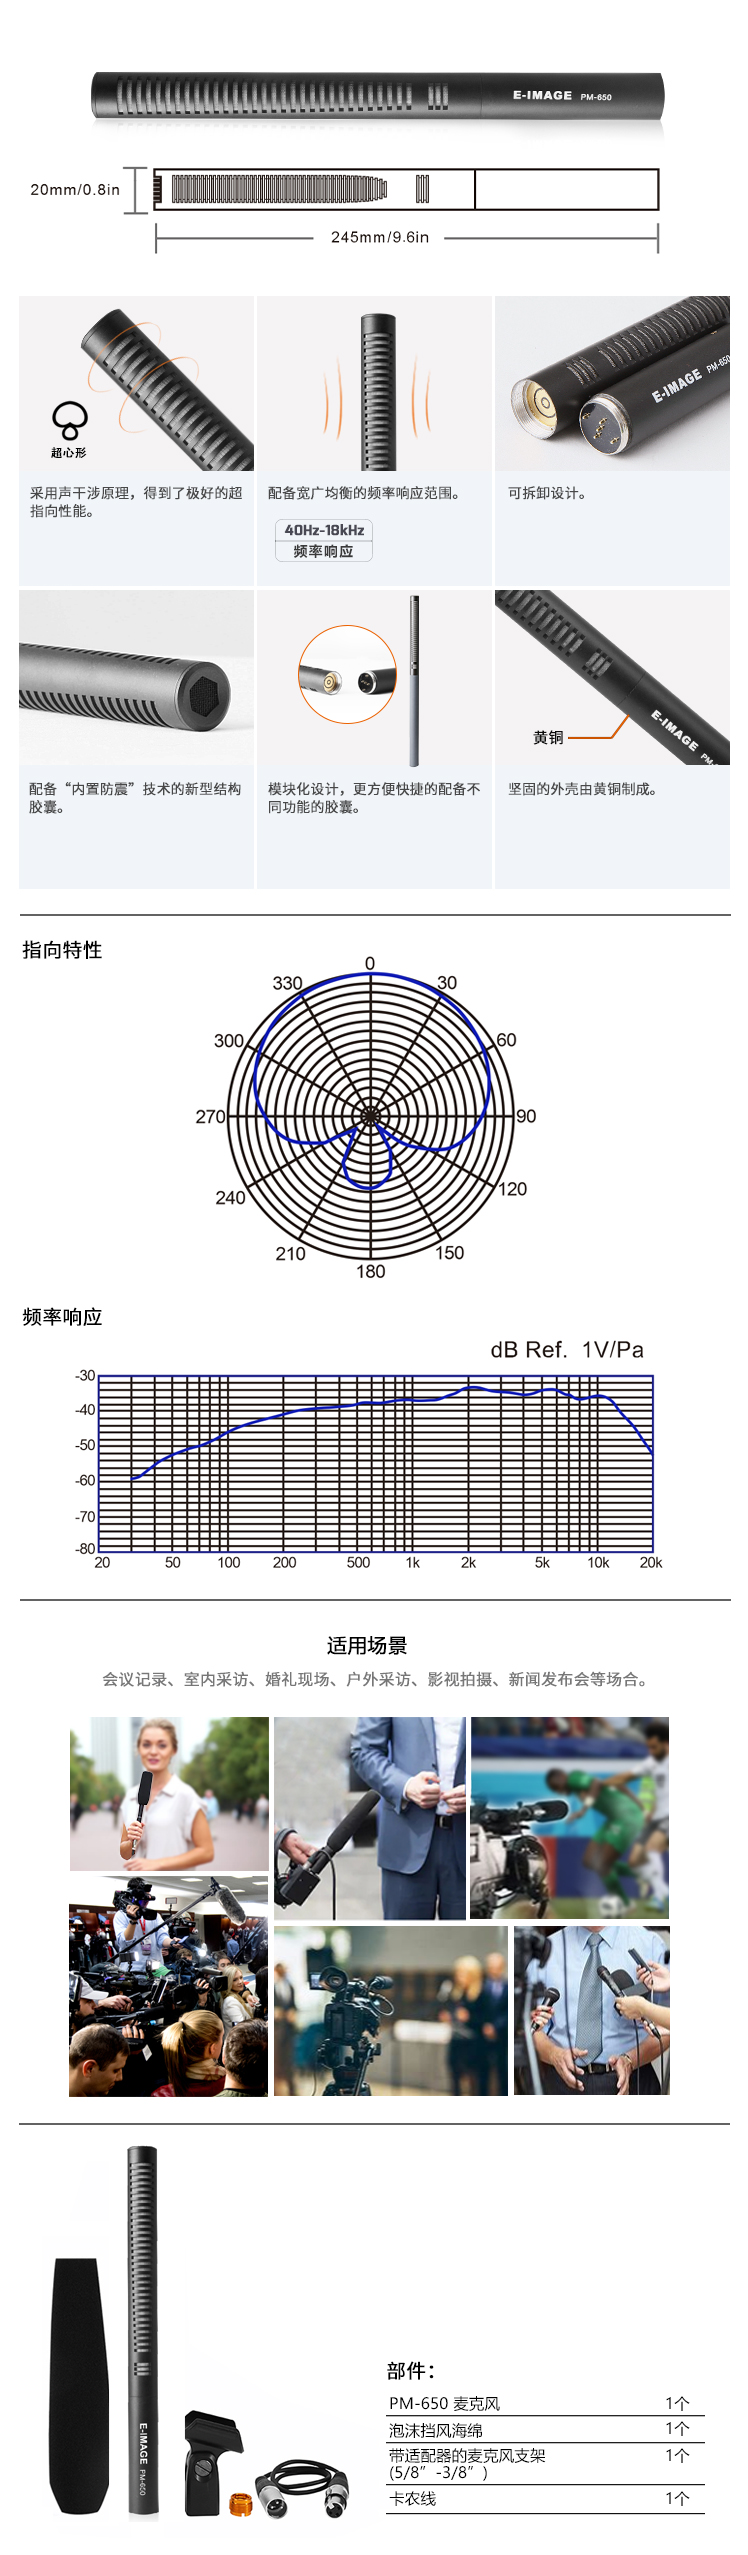 PM-650网站中文.jpg